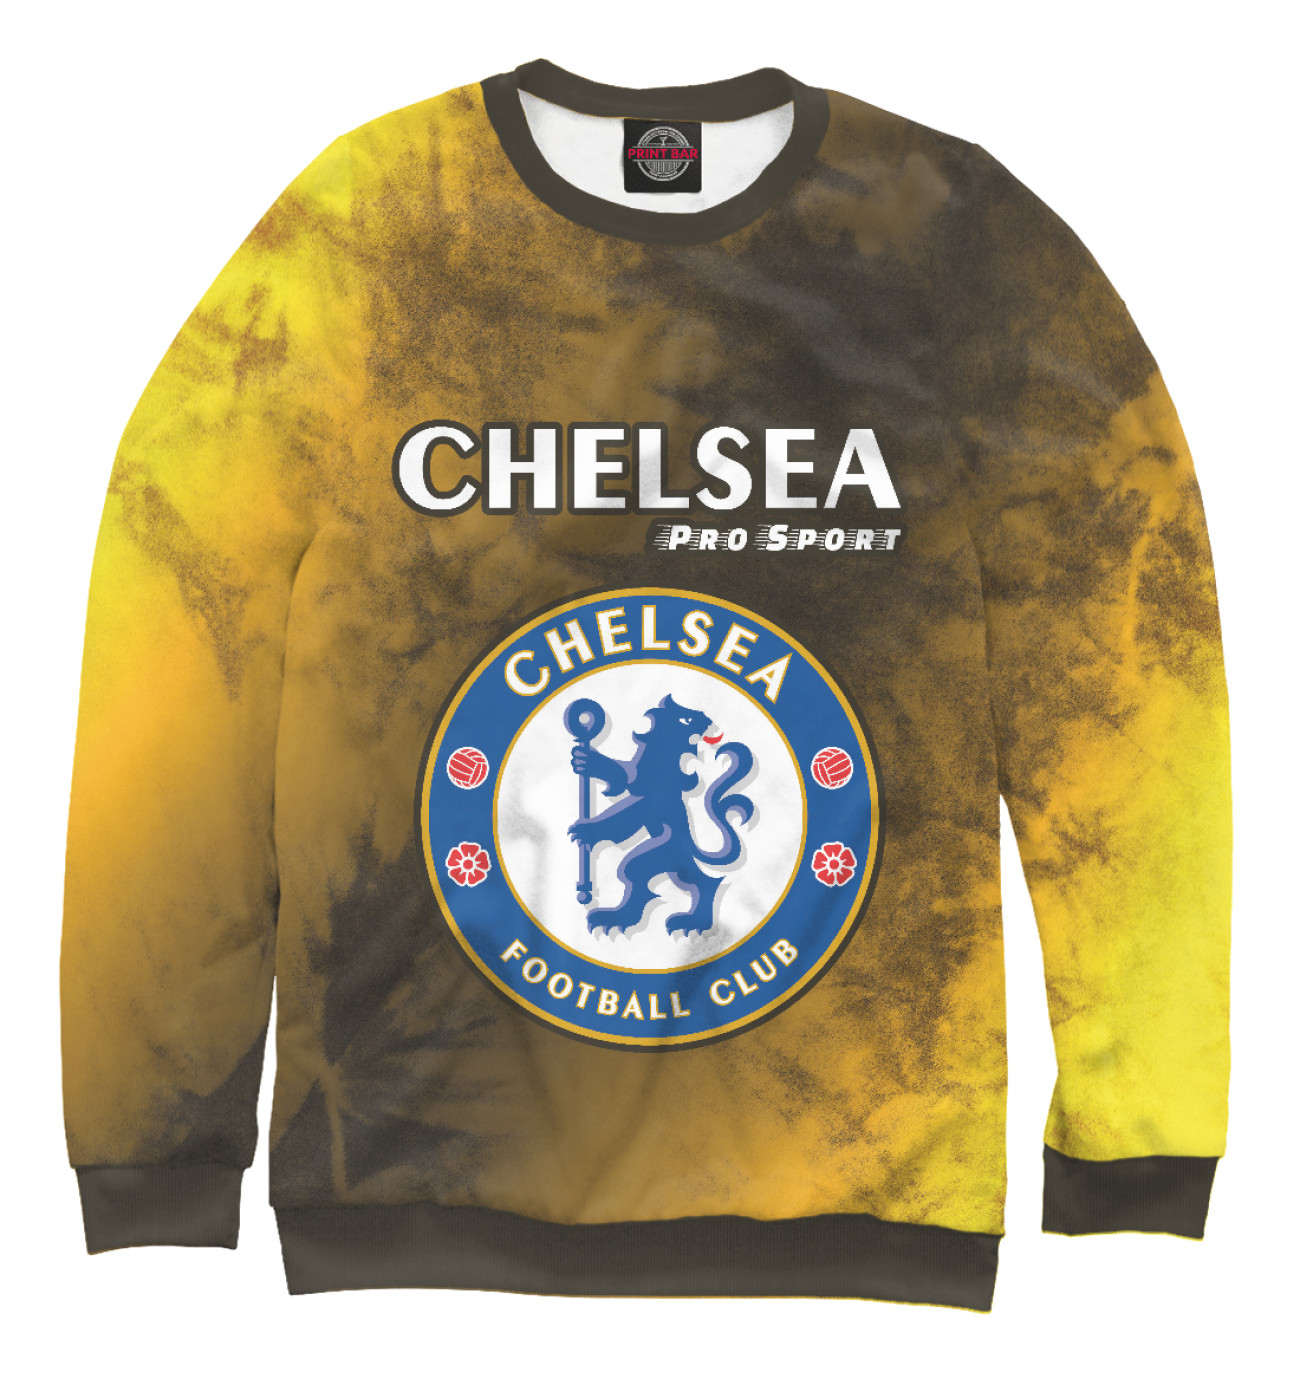 Женский Свитшот Chelsea | Pro Sport - Tie-Dye, артикул: CHL-235183-swi-1